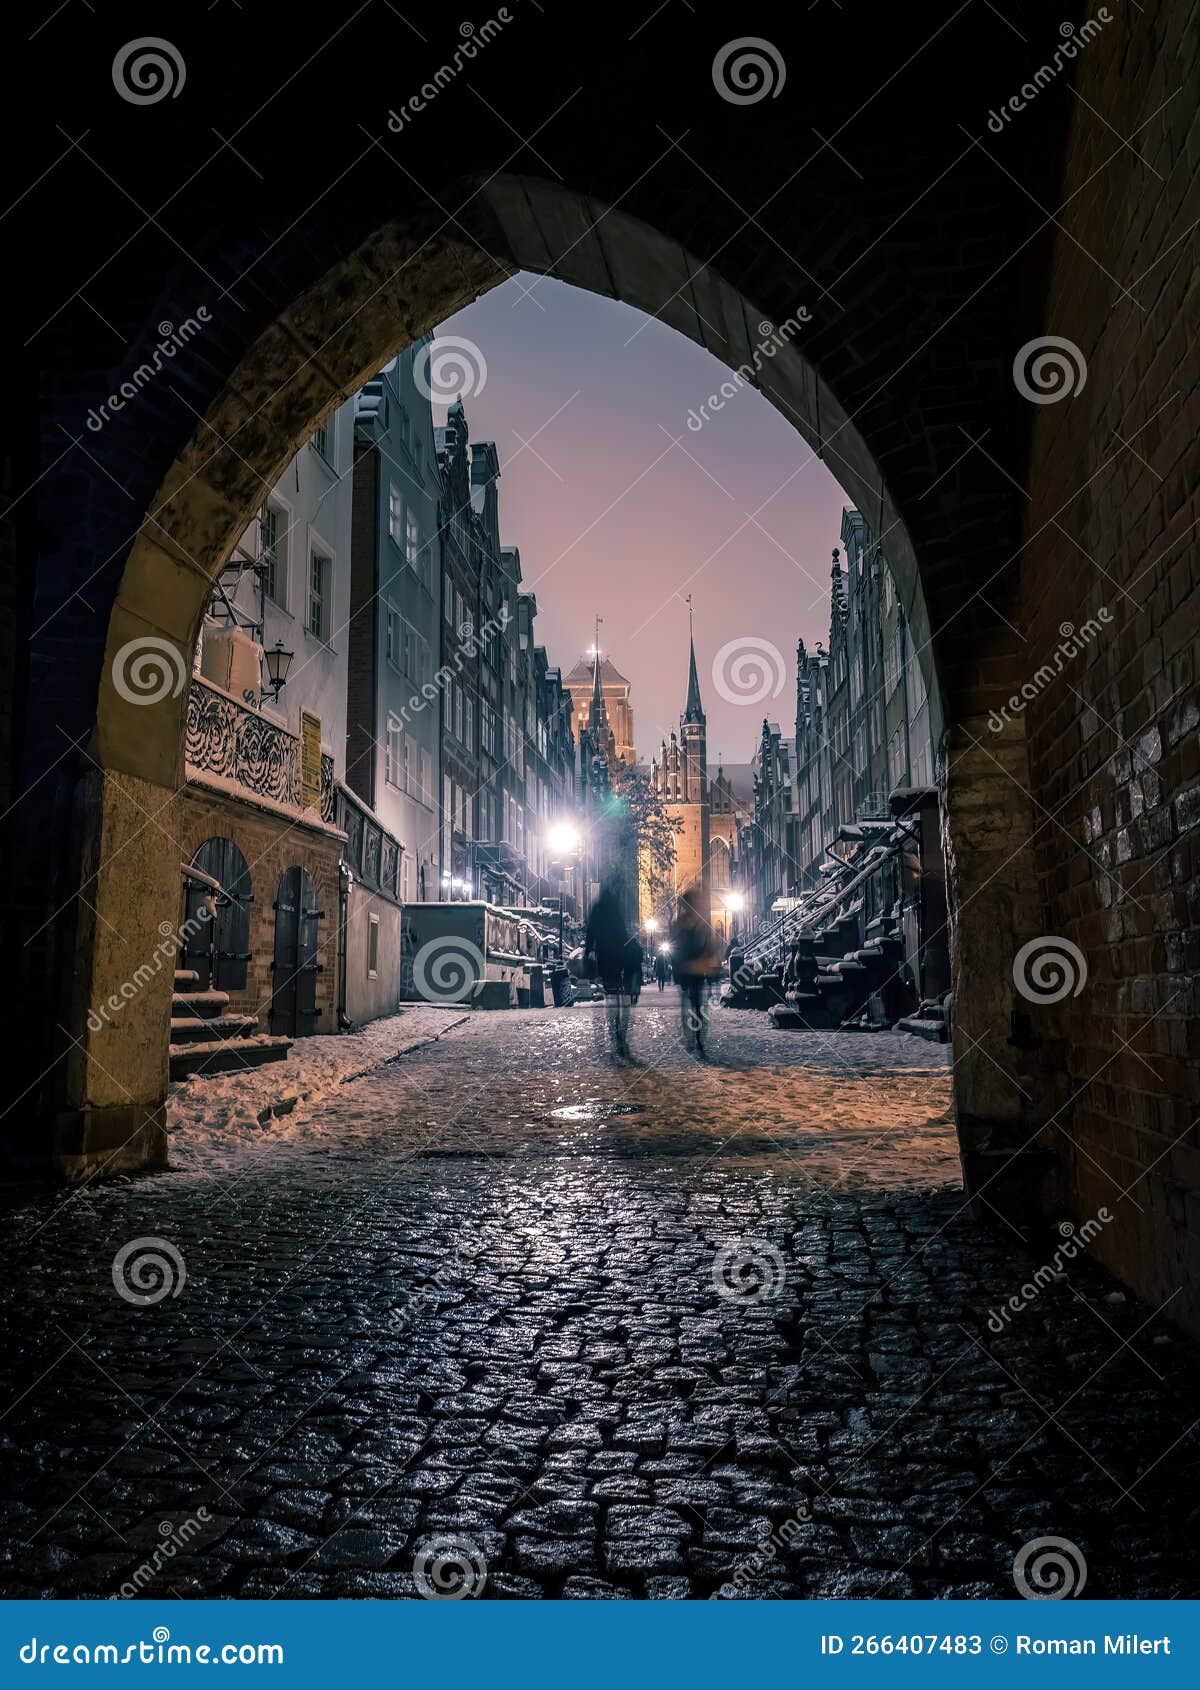 mariacka street at night, winter time, danzig, poland